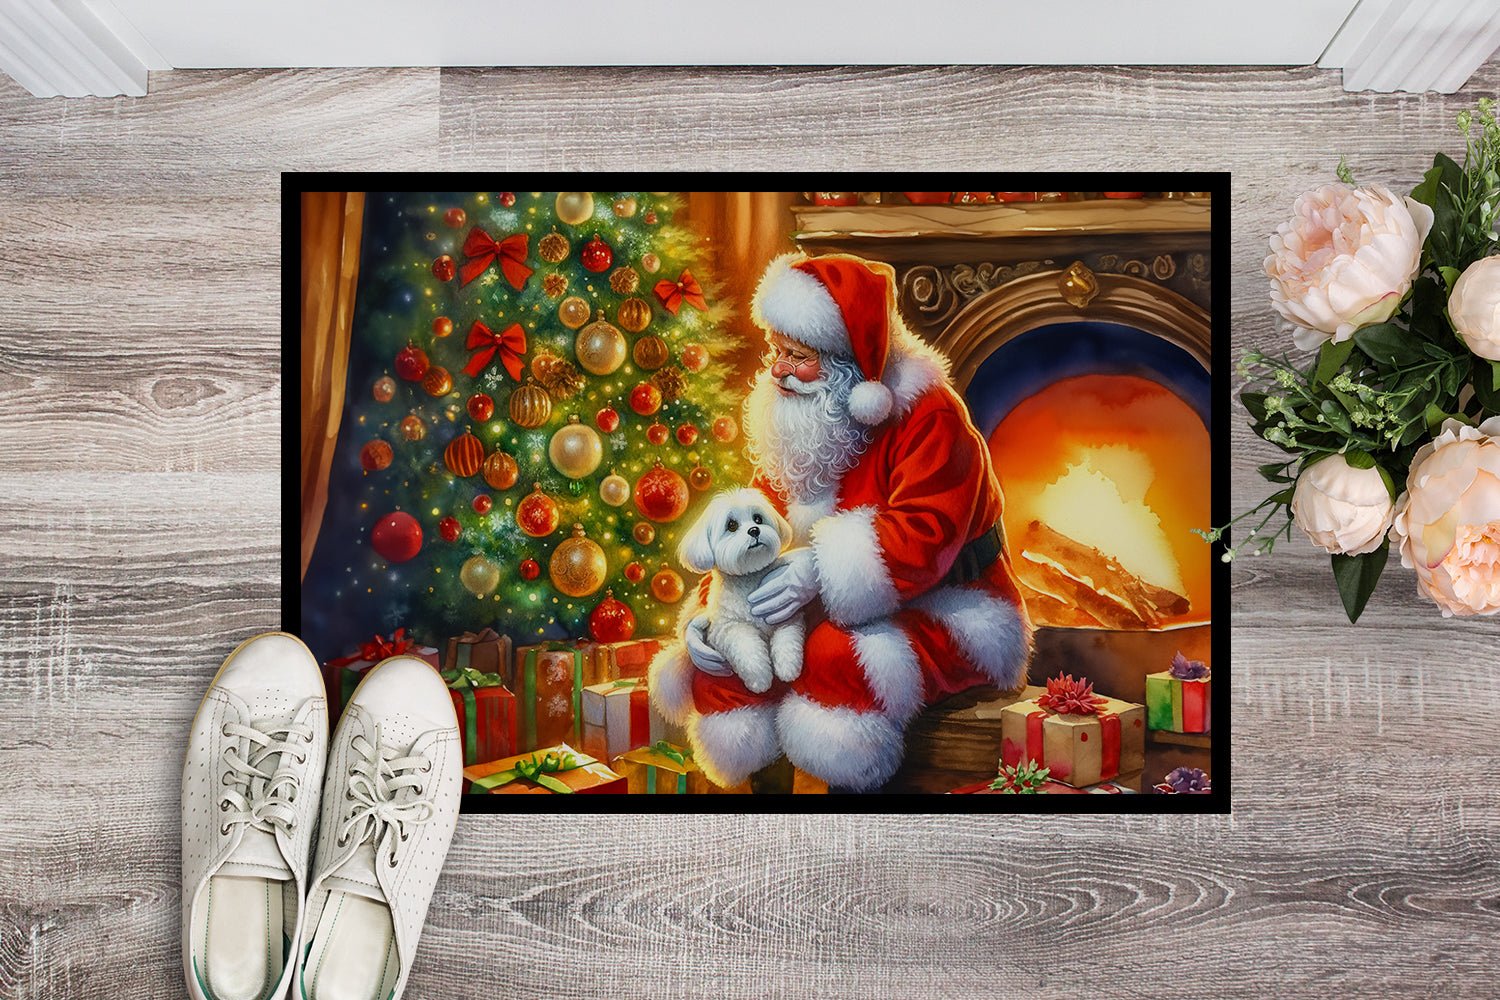 Buy this Maltese and Santa Claus Doormat